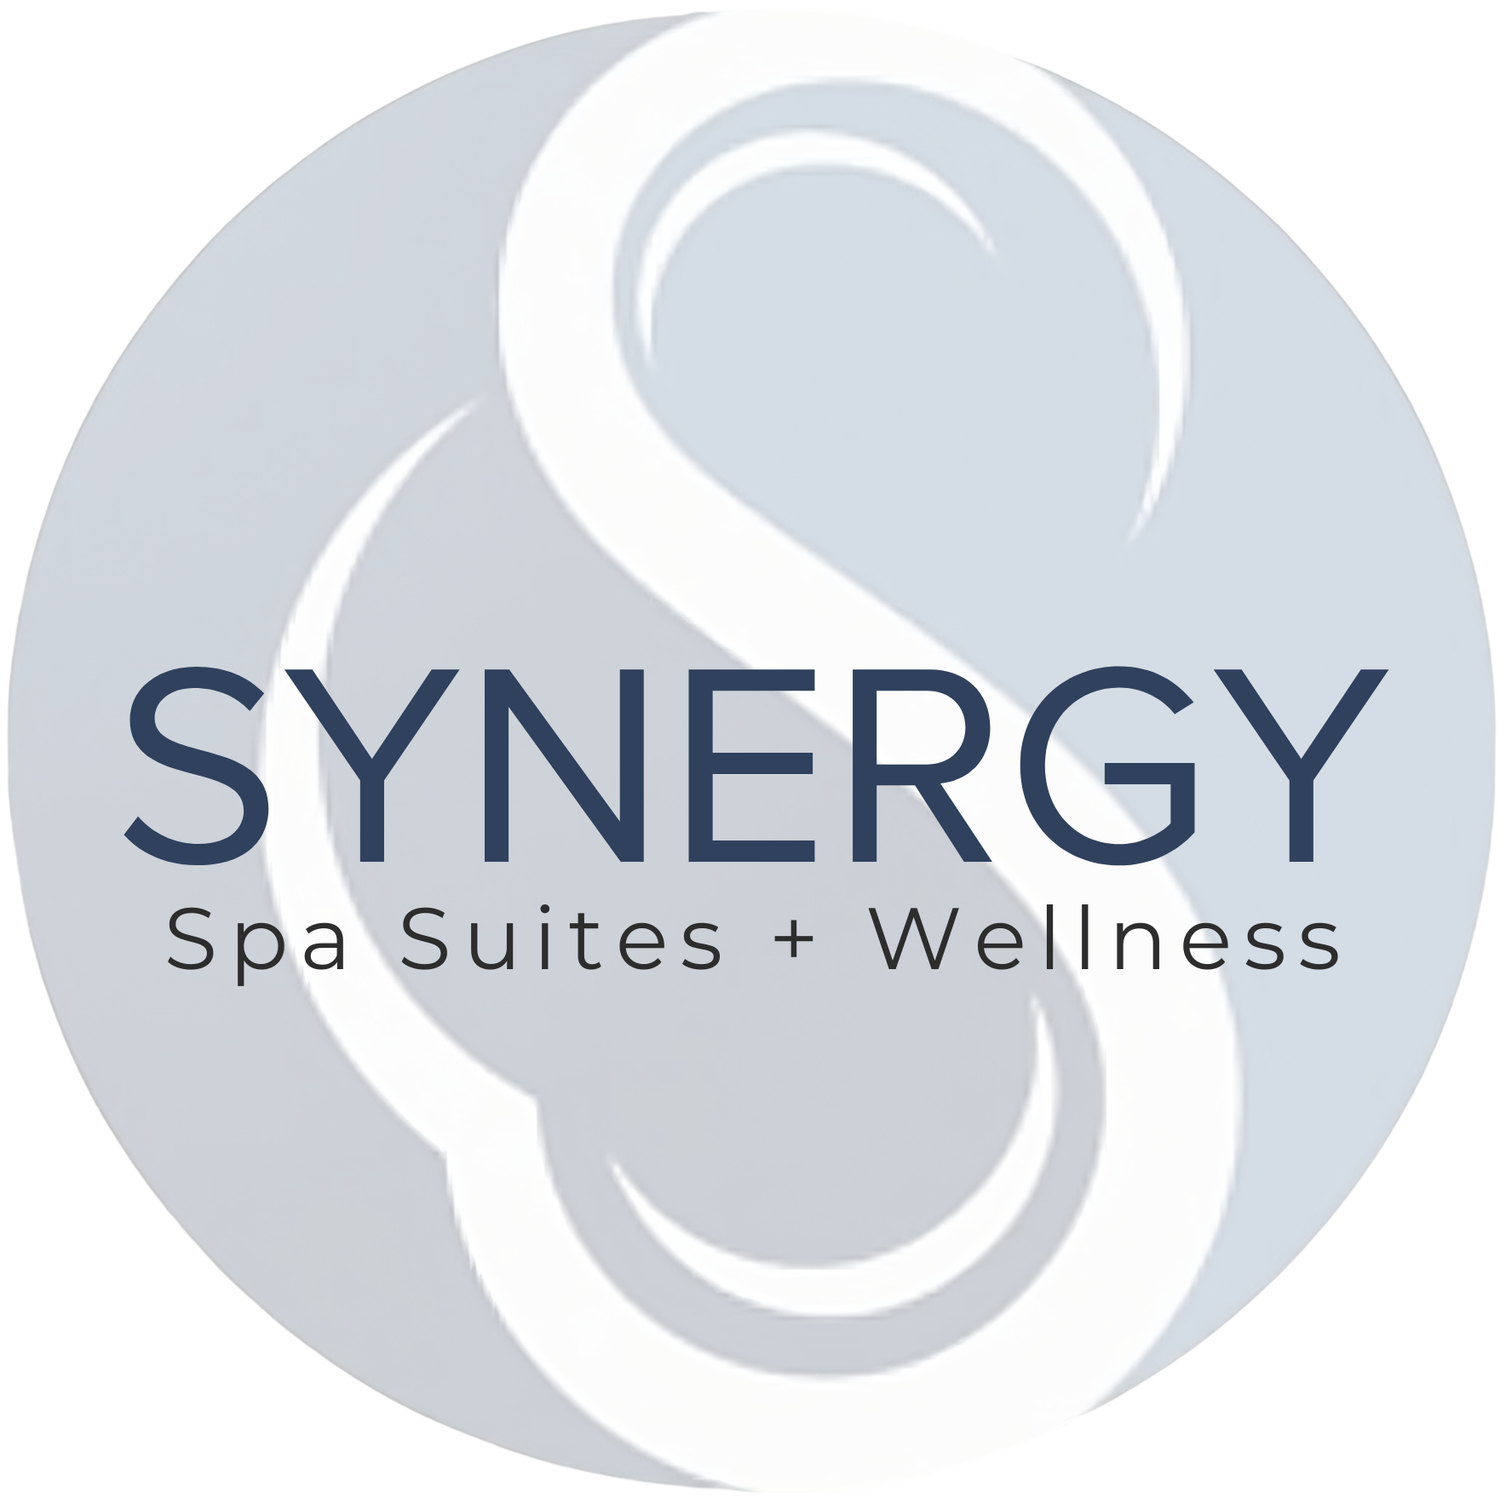 Synergy Spa Suites + Wellness